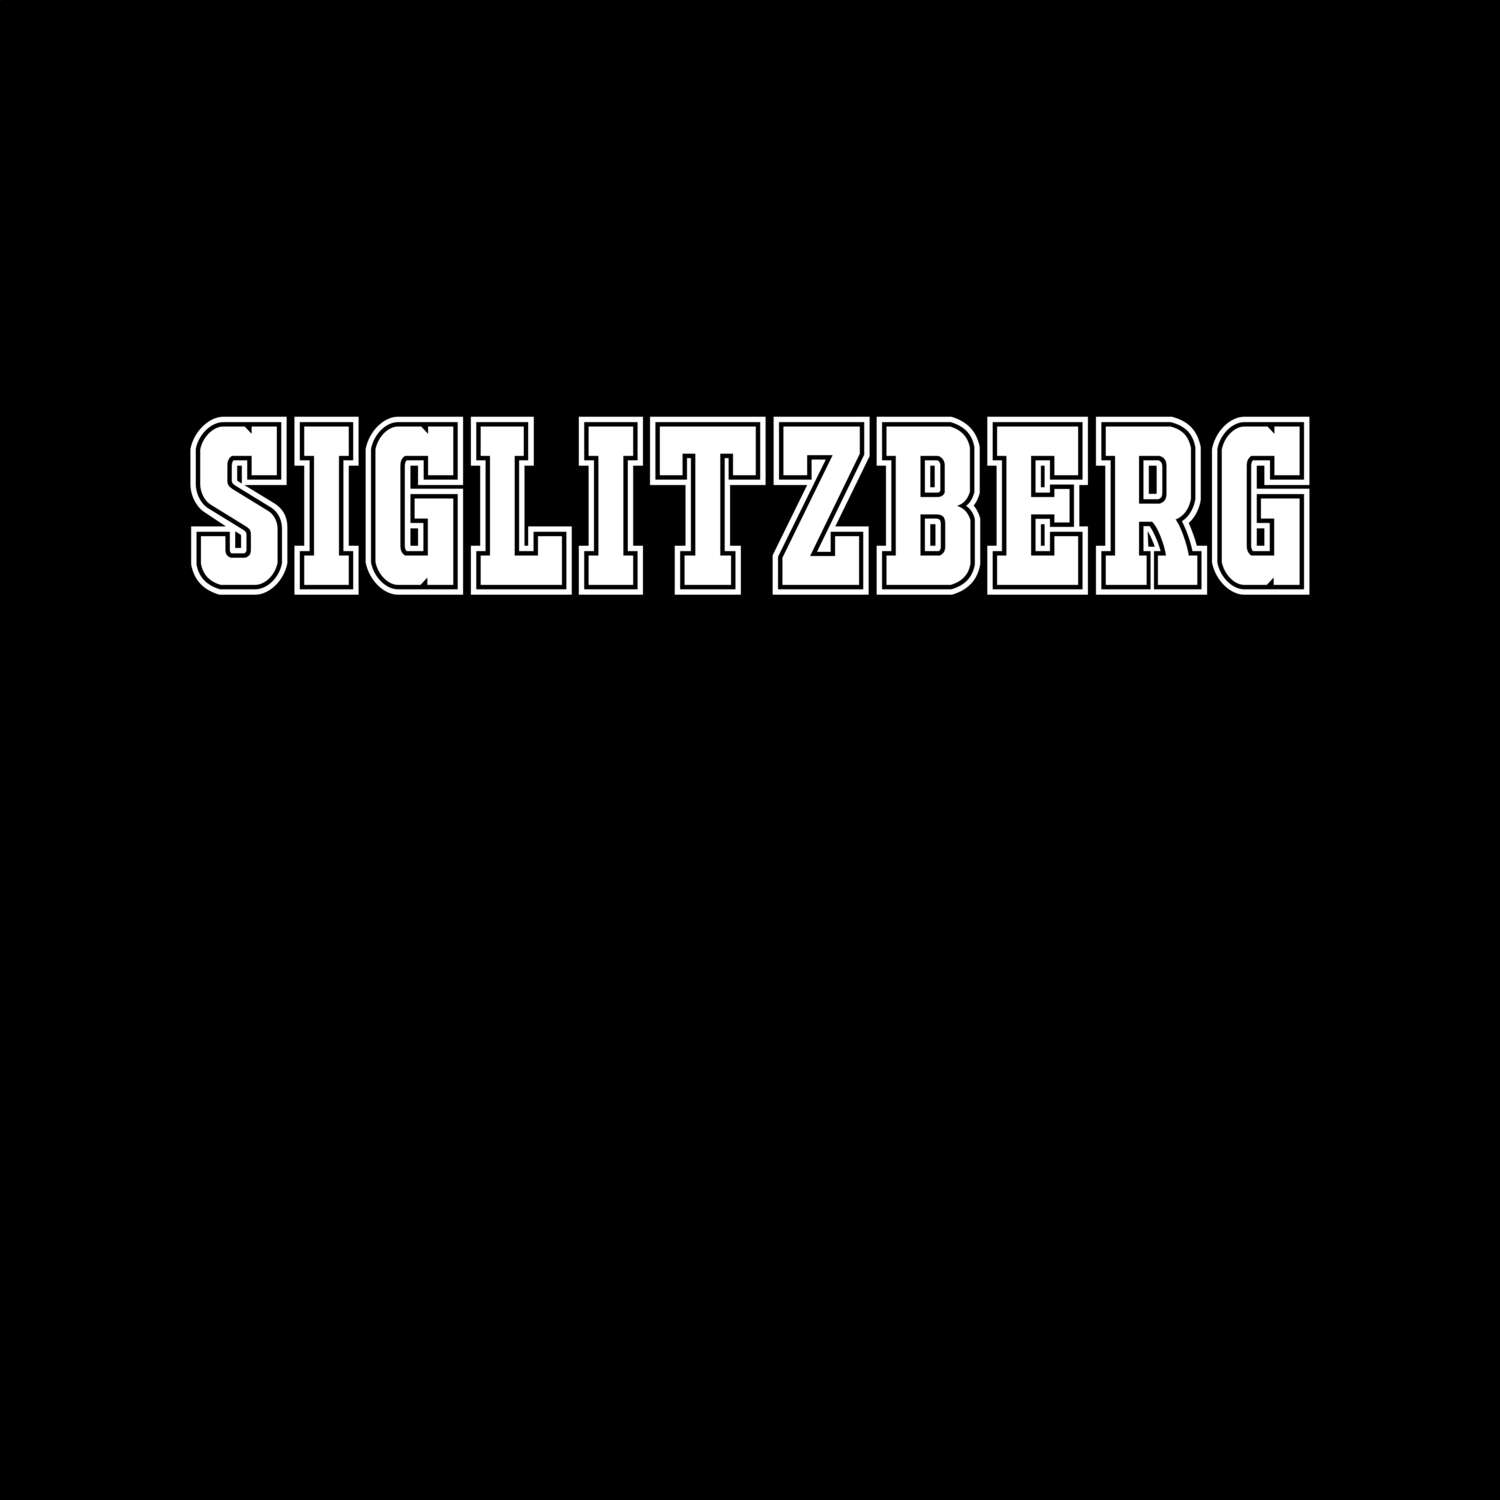 Siglitzberg T-Shirt »Classic«